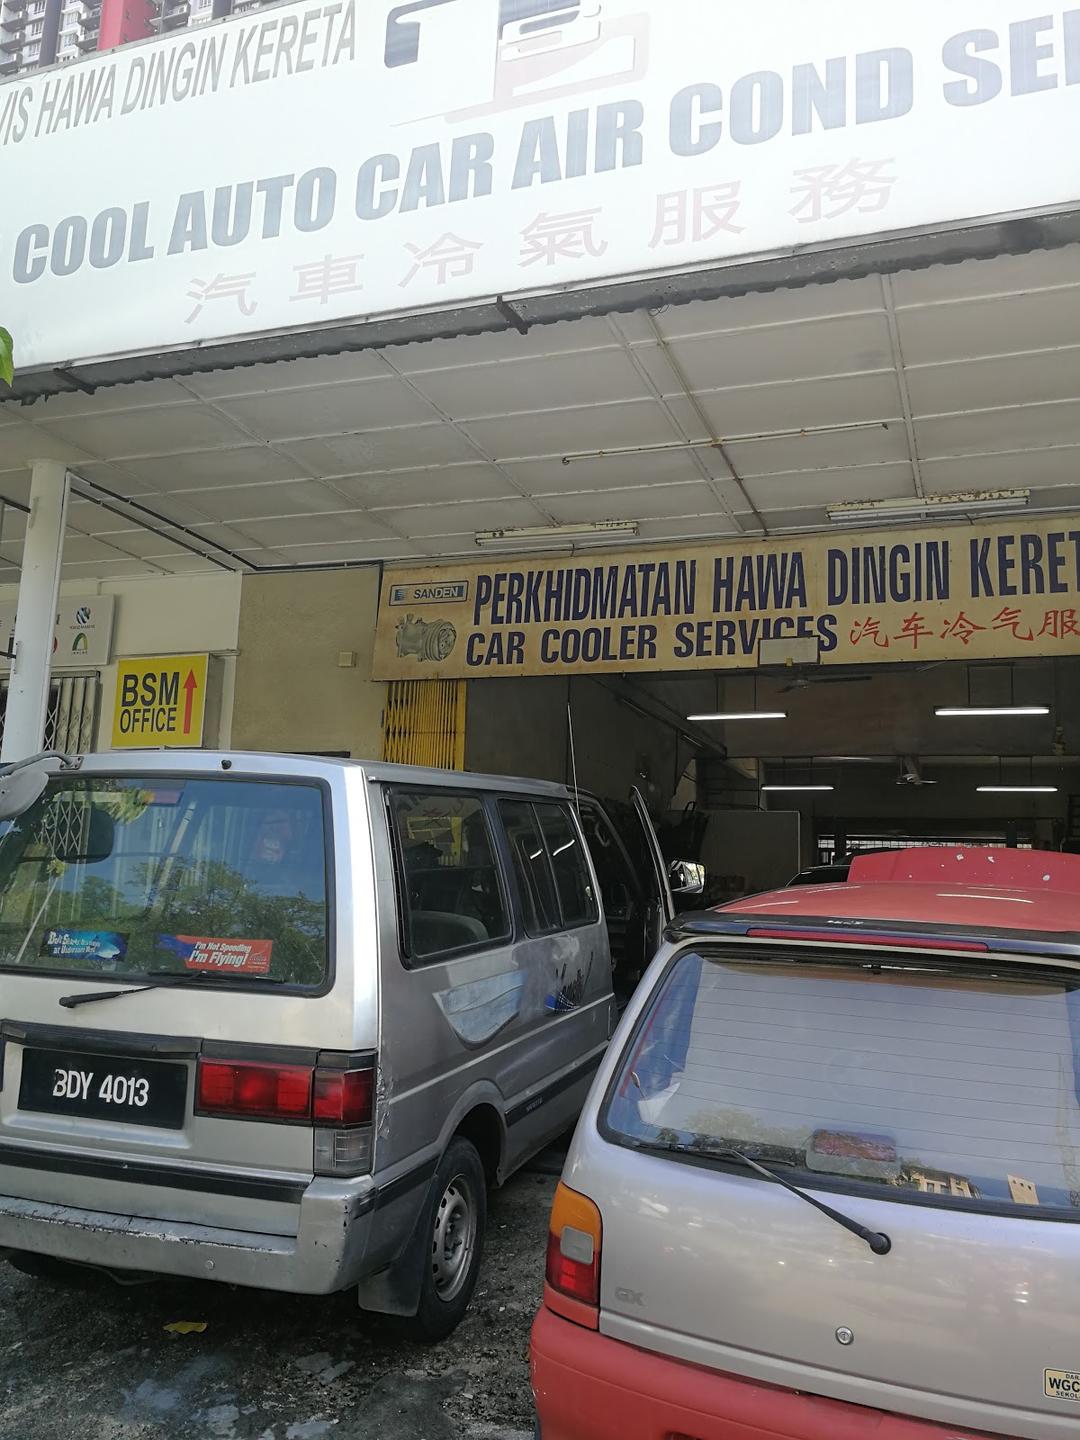 Photo of Es Cool Auto Car Air Cond Service - Kuala Lumpur, Kuala lumpur, Malaysia